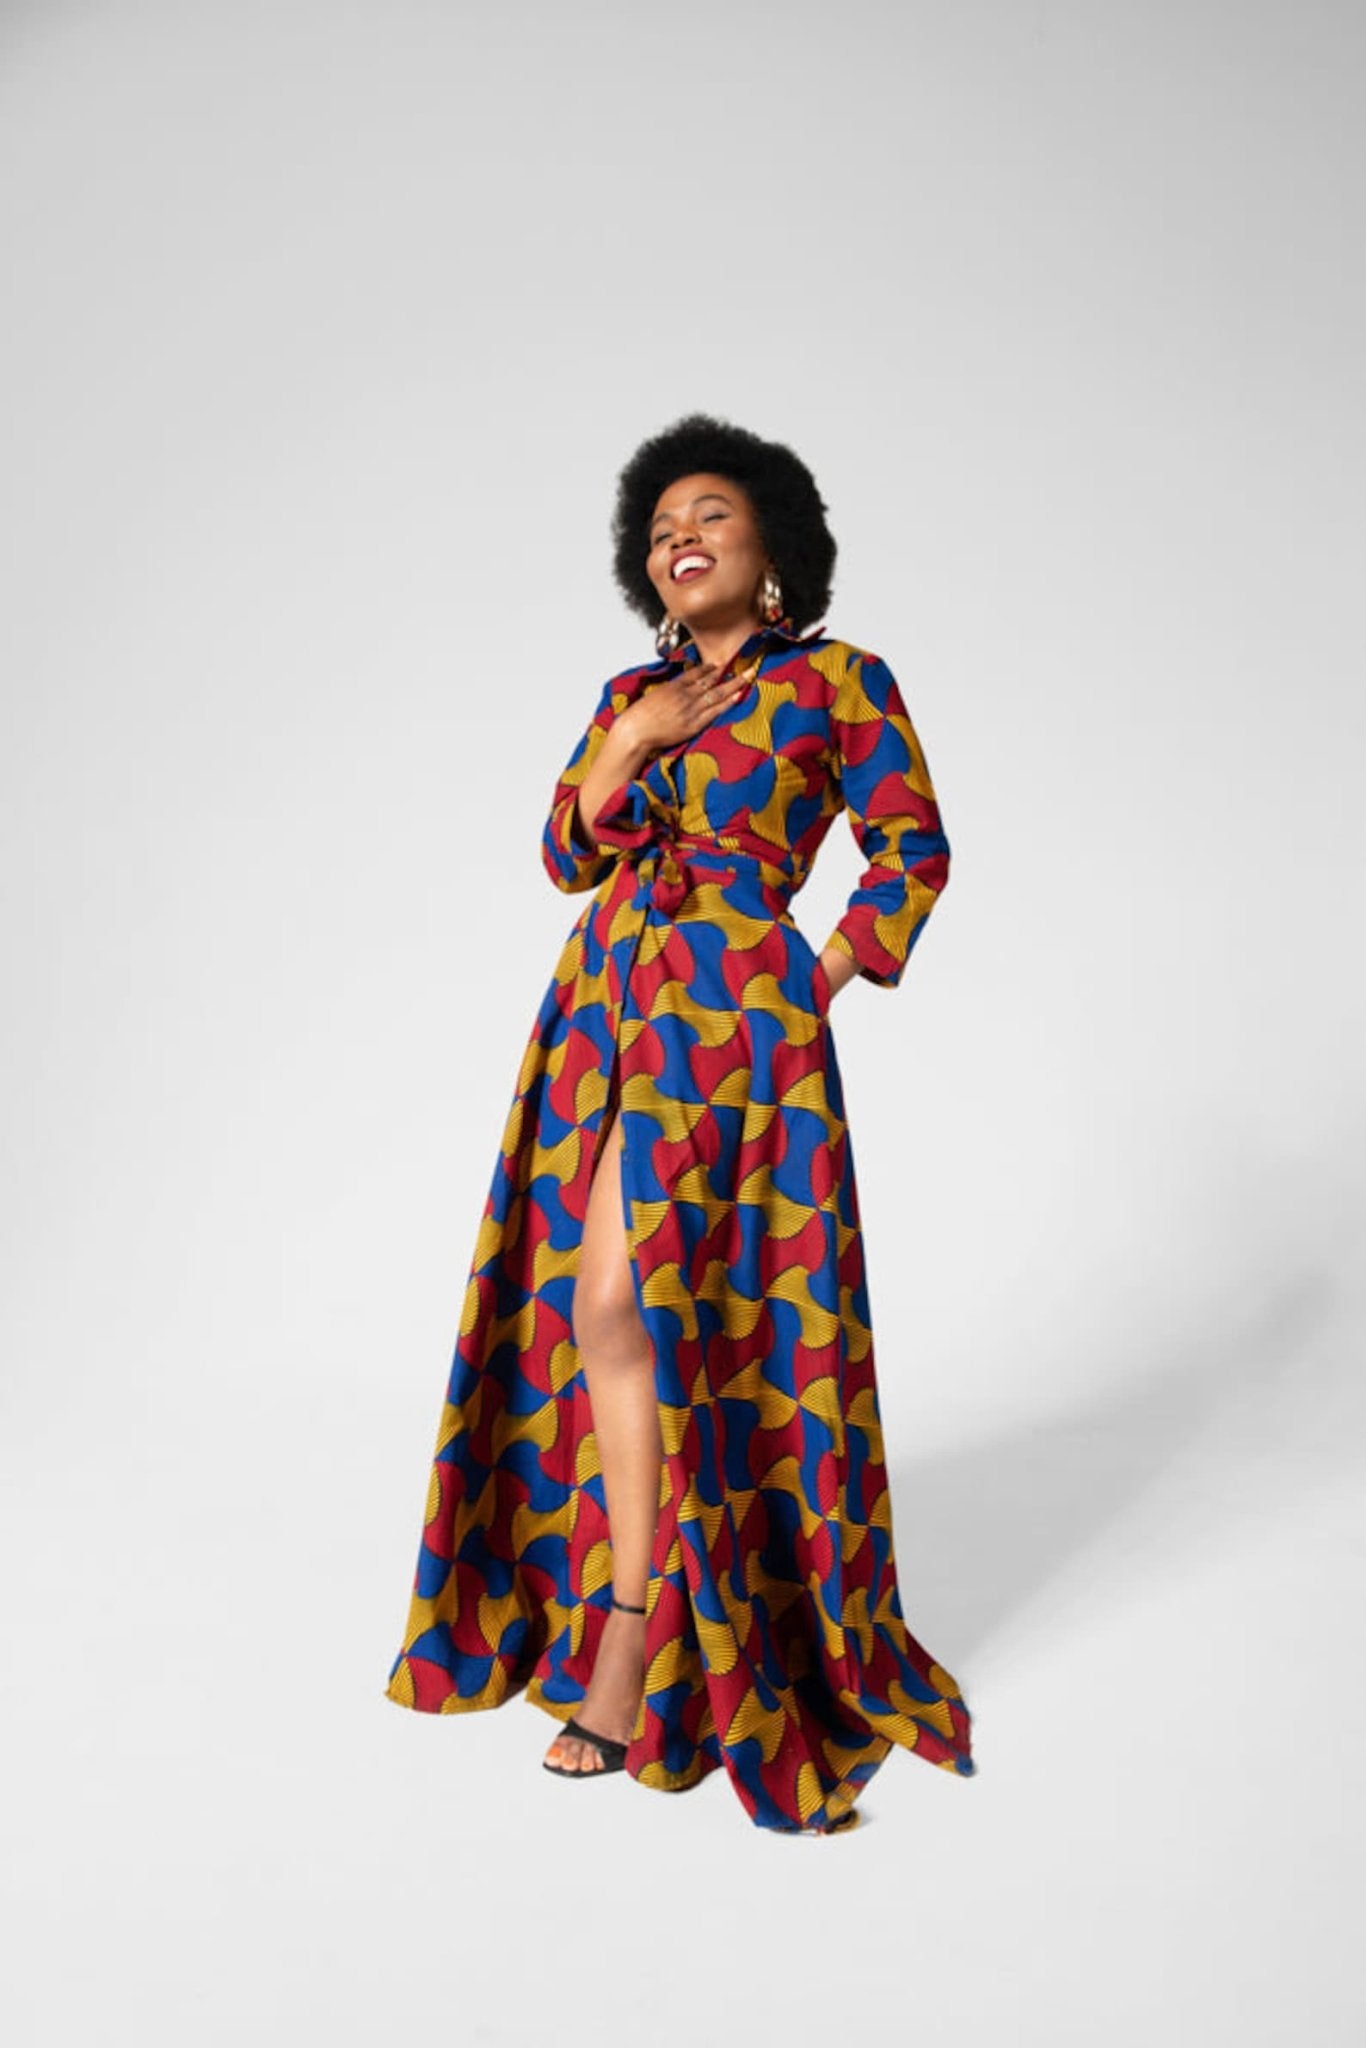 BLUE AFRICAN ANKARA PRINT PLUS SIZE CLOTHING PARTY SHIRT DRESS - Africanclothinghub UK, US, Canada